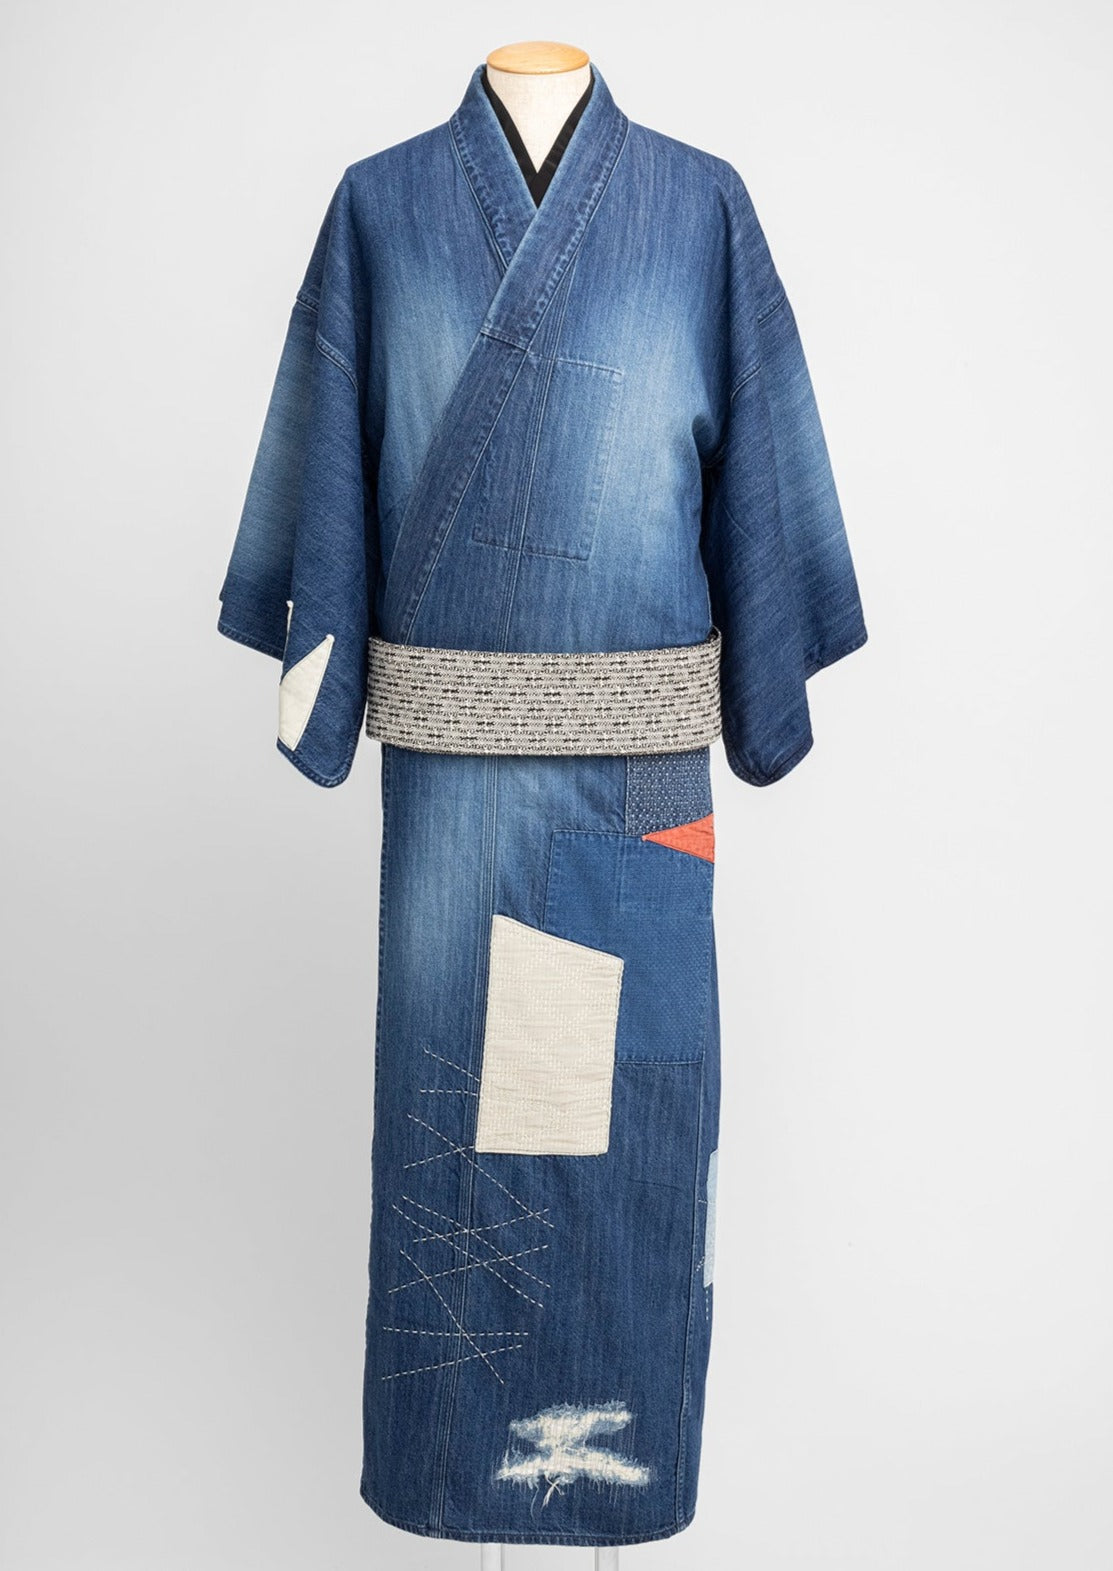 KAPUKI original denim kimono patchwork RED men's